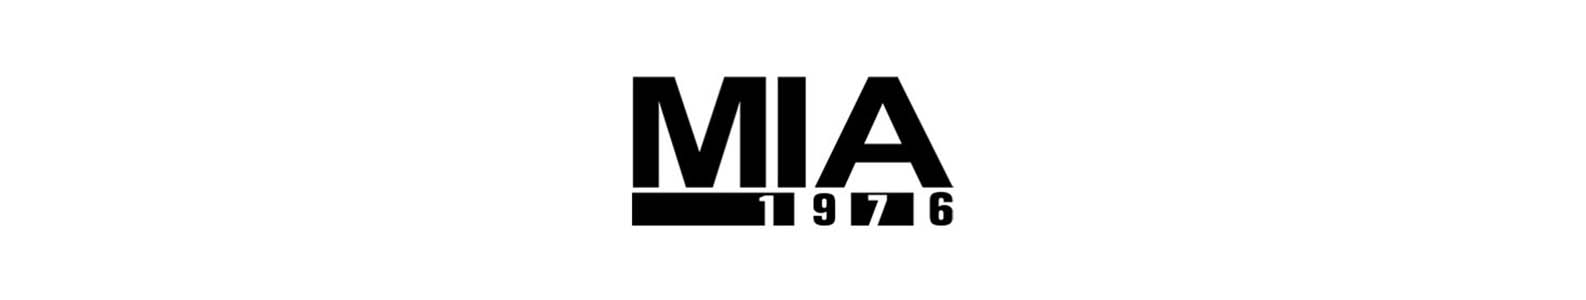 MIA brand header image